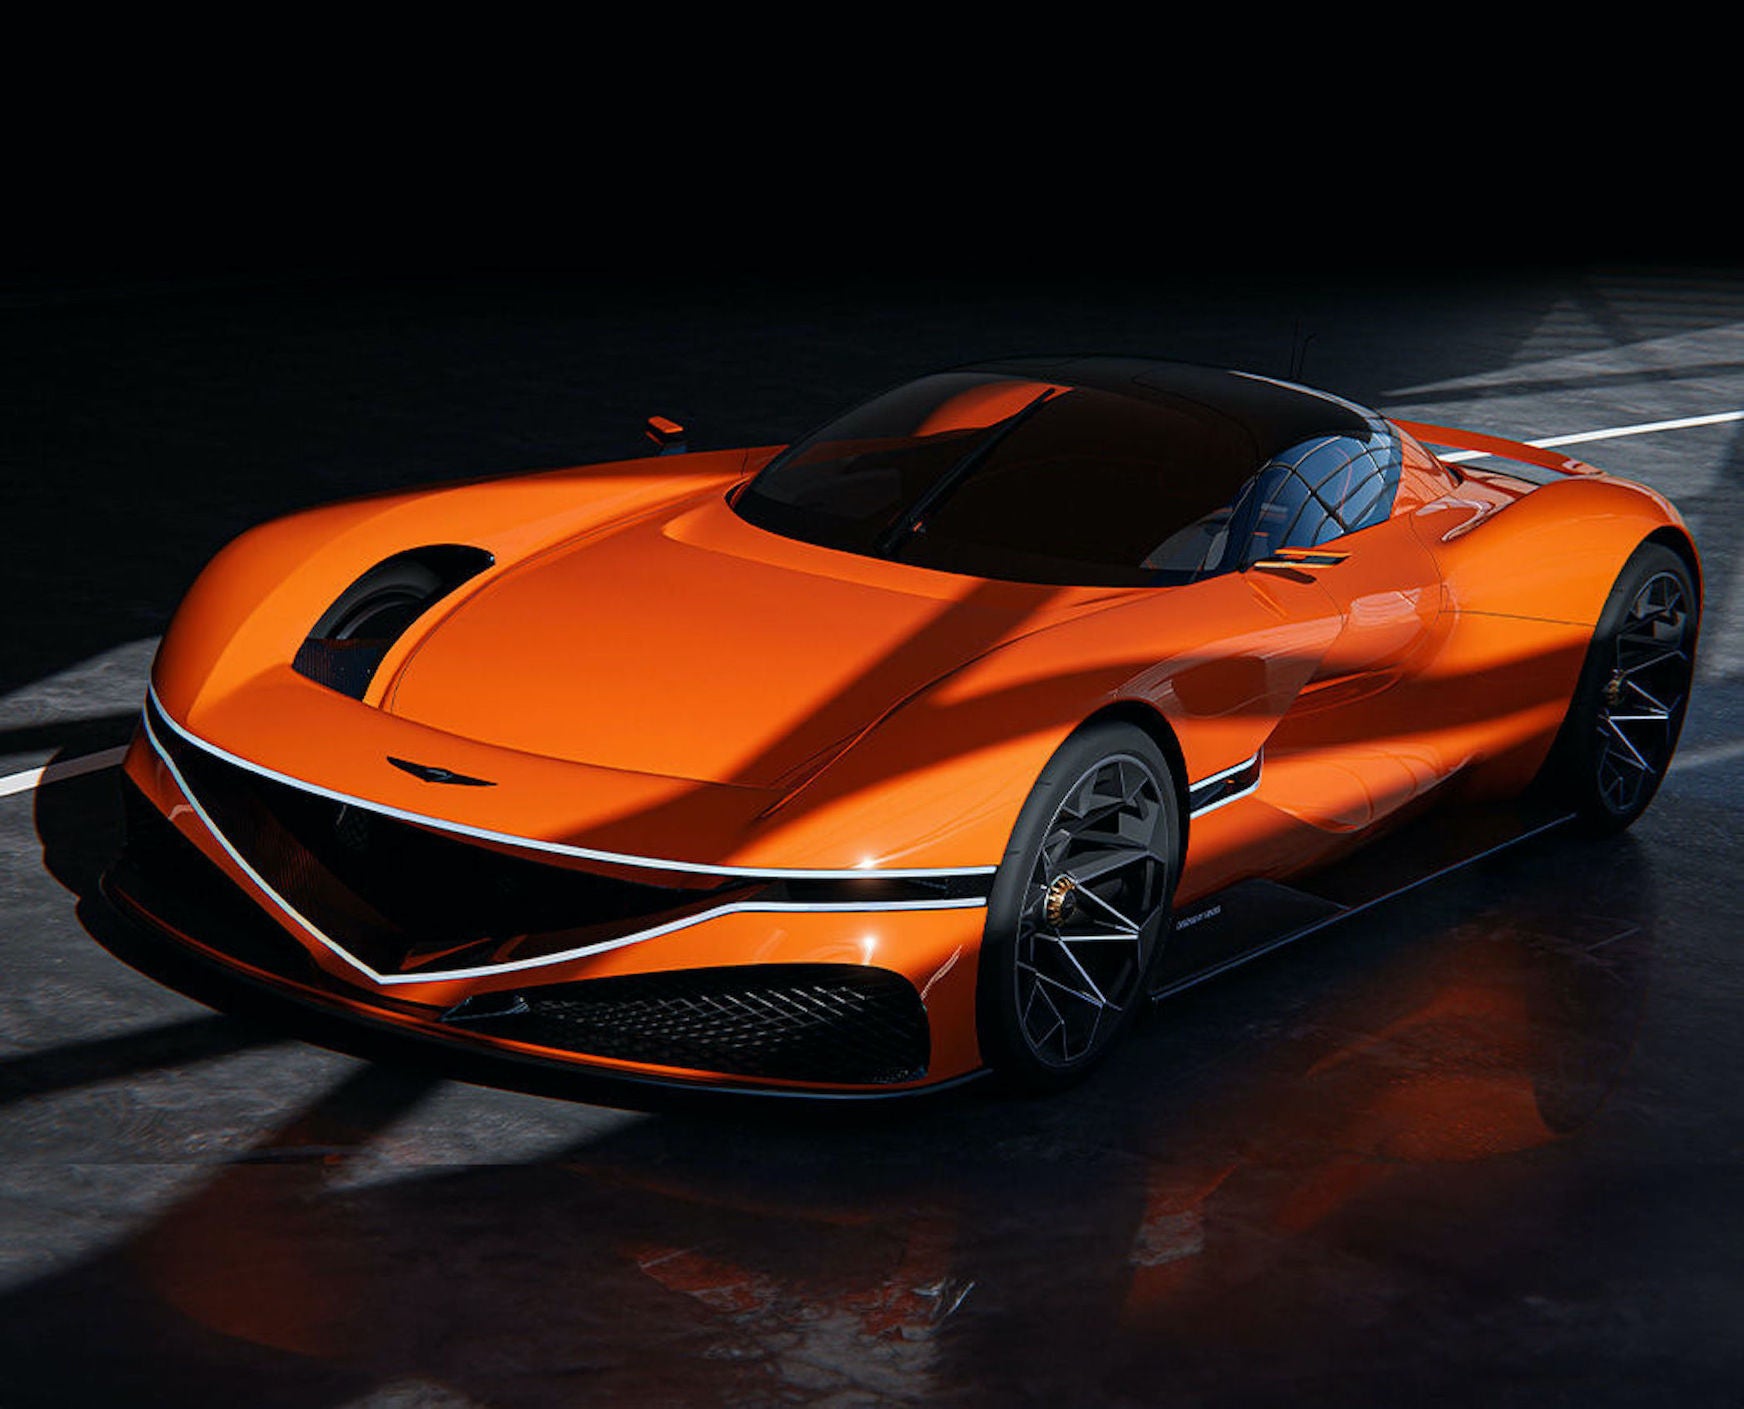 ¿El concepto X Gran Berlinetta es una vista previa de un futuro hipercoche Génesis?